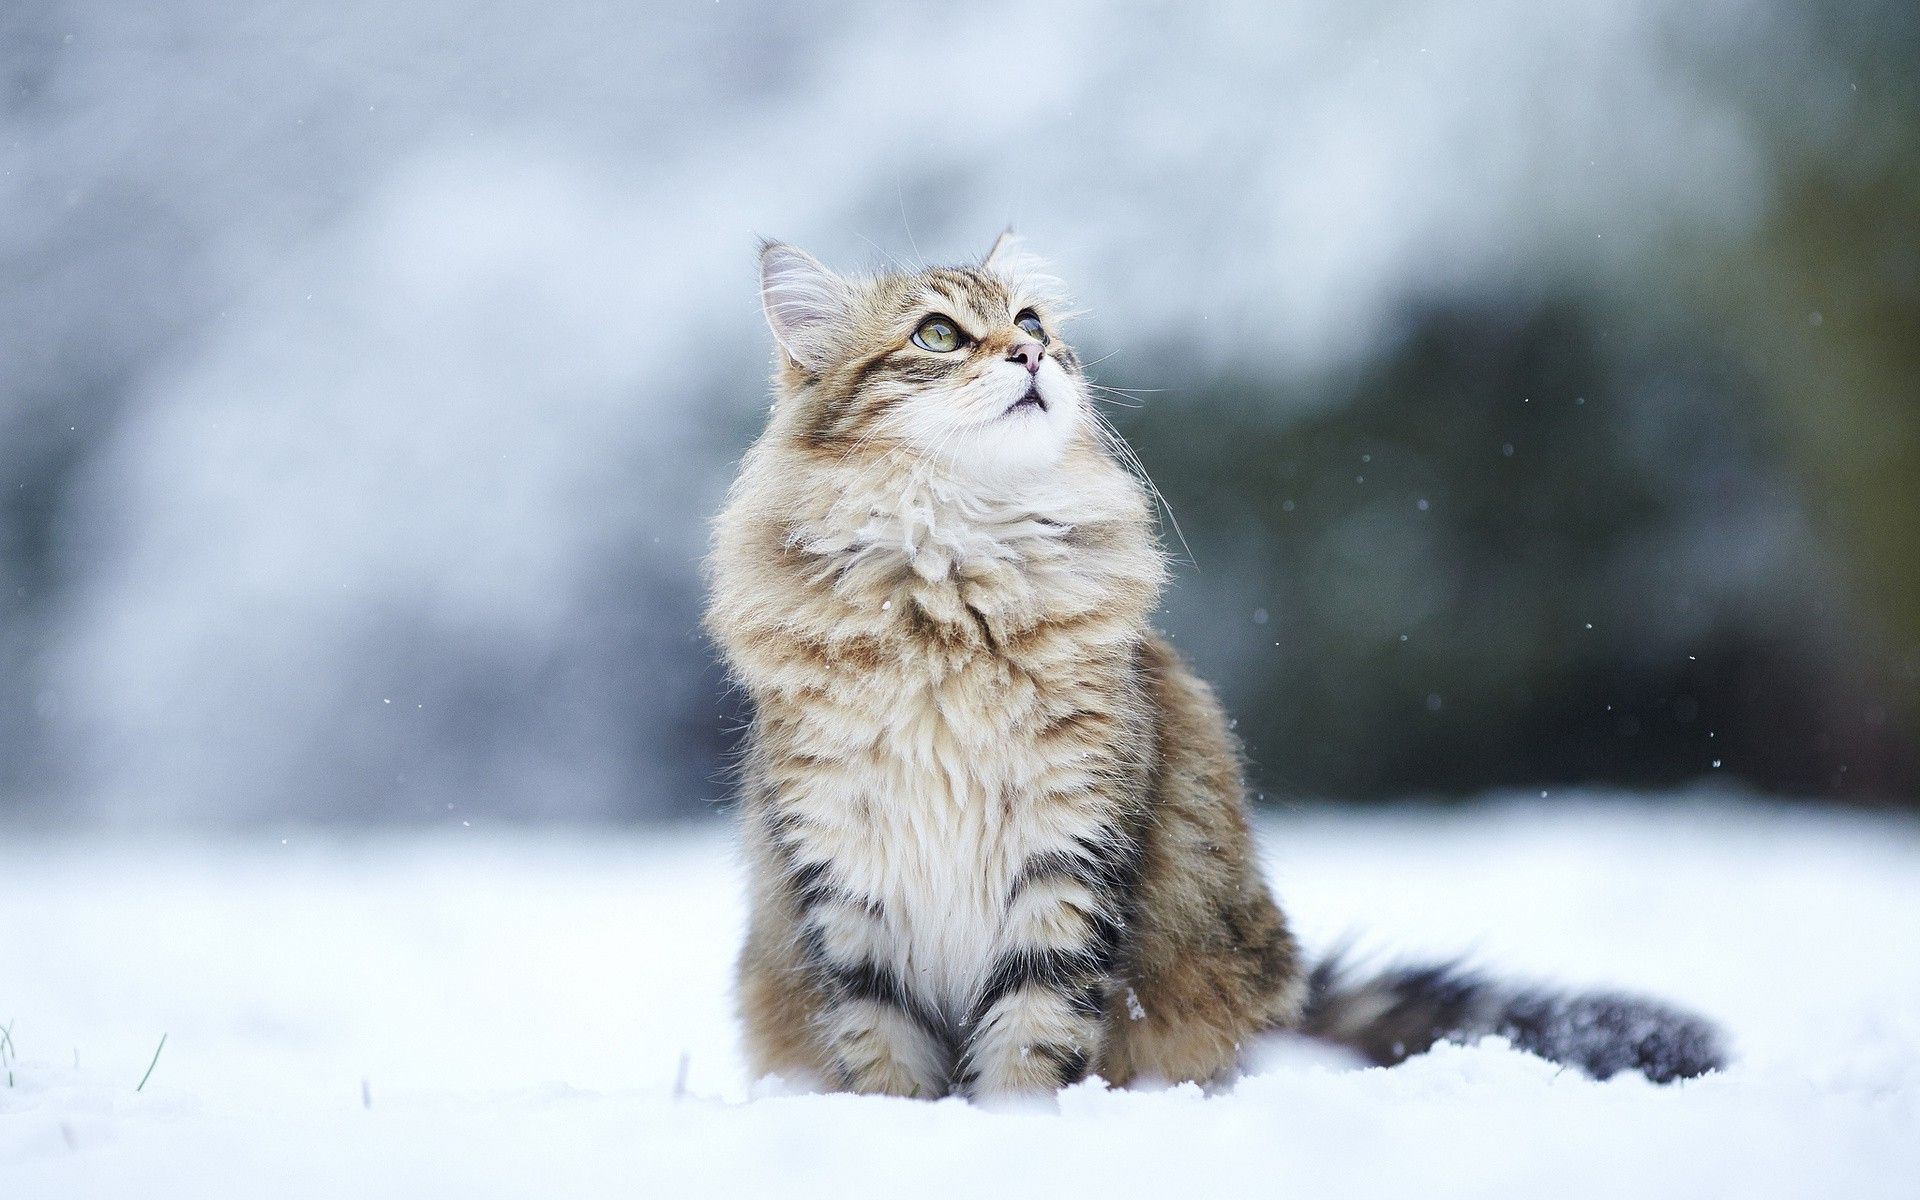 cat-in-the-snow-animal-hd-wallpaper-1920x1200-5268.jpg